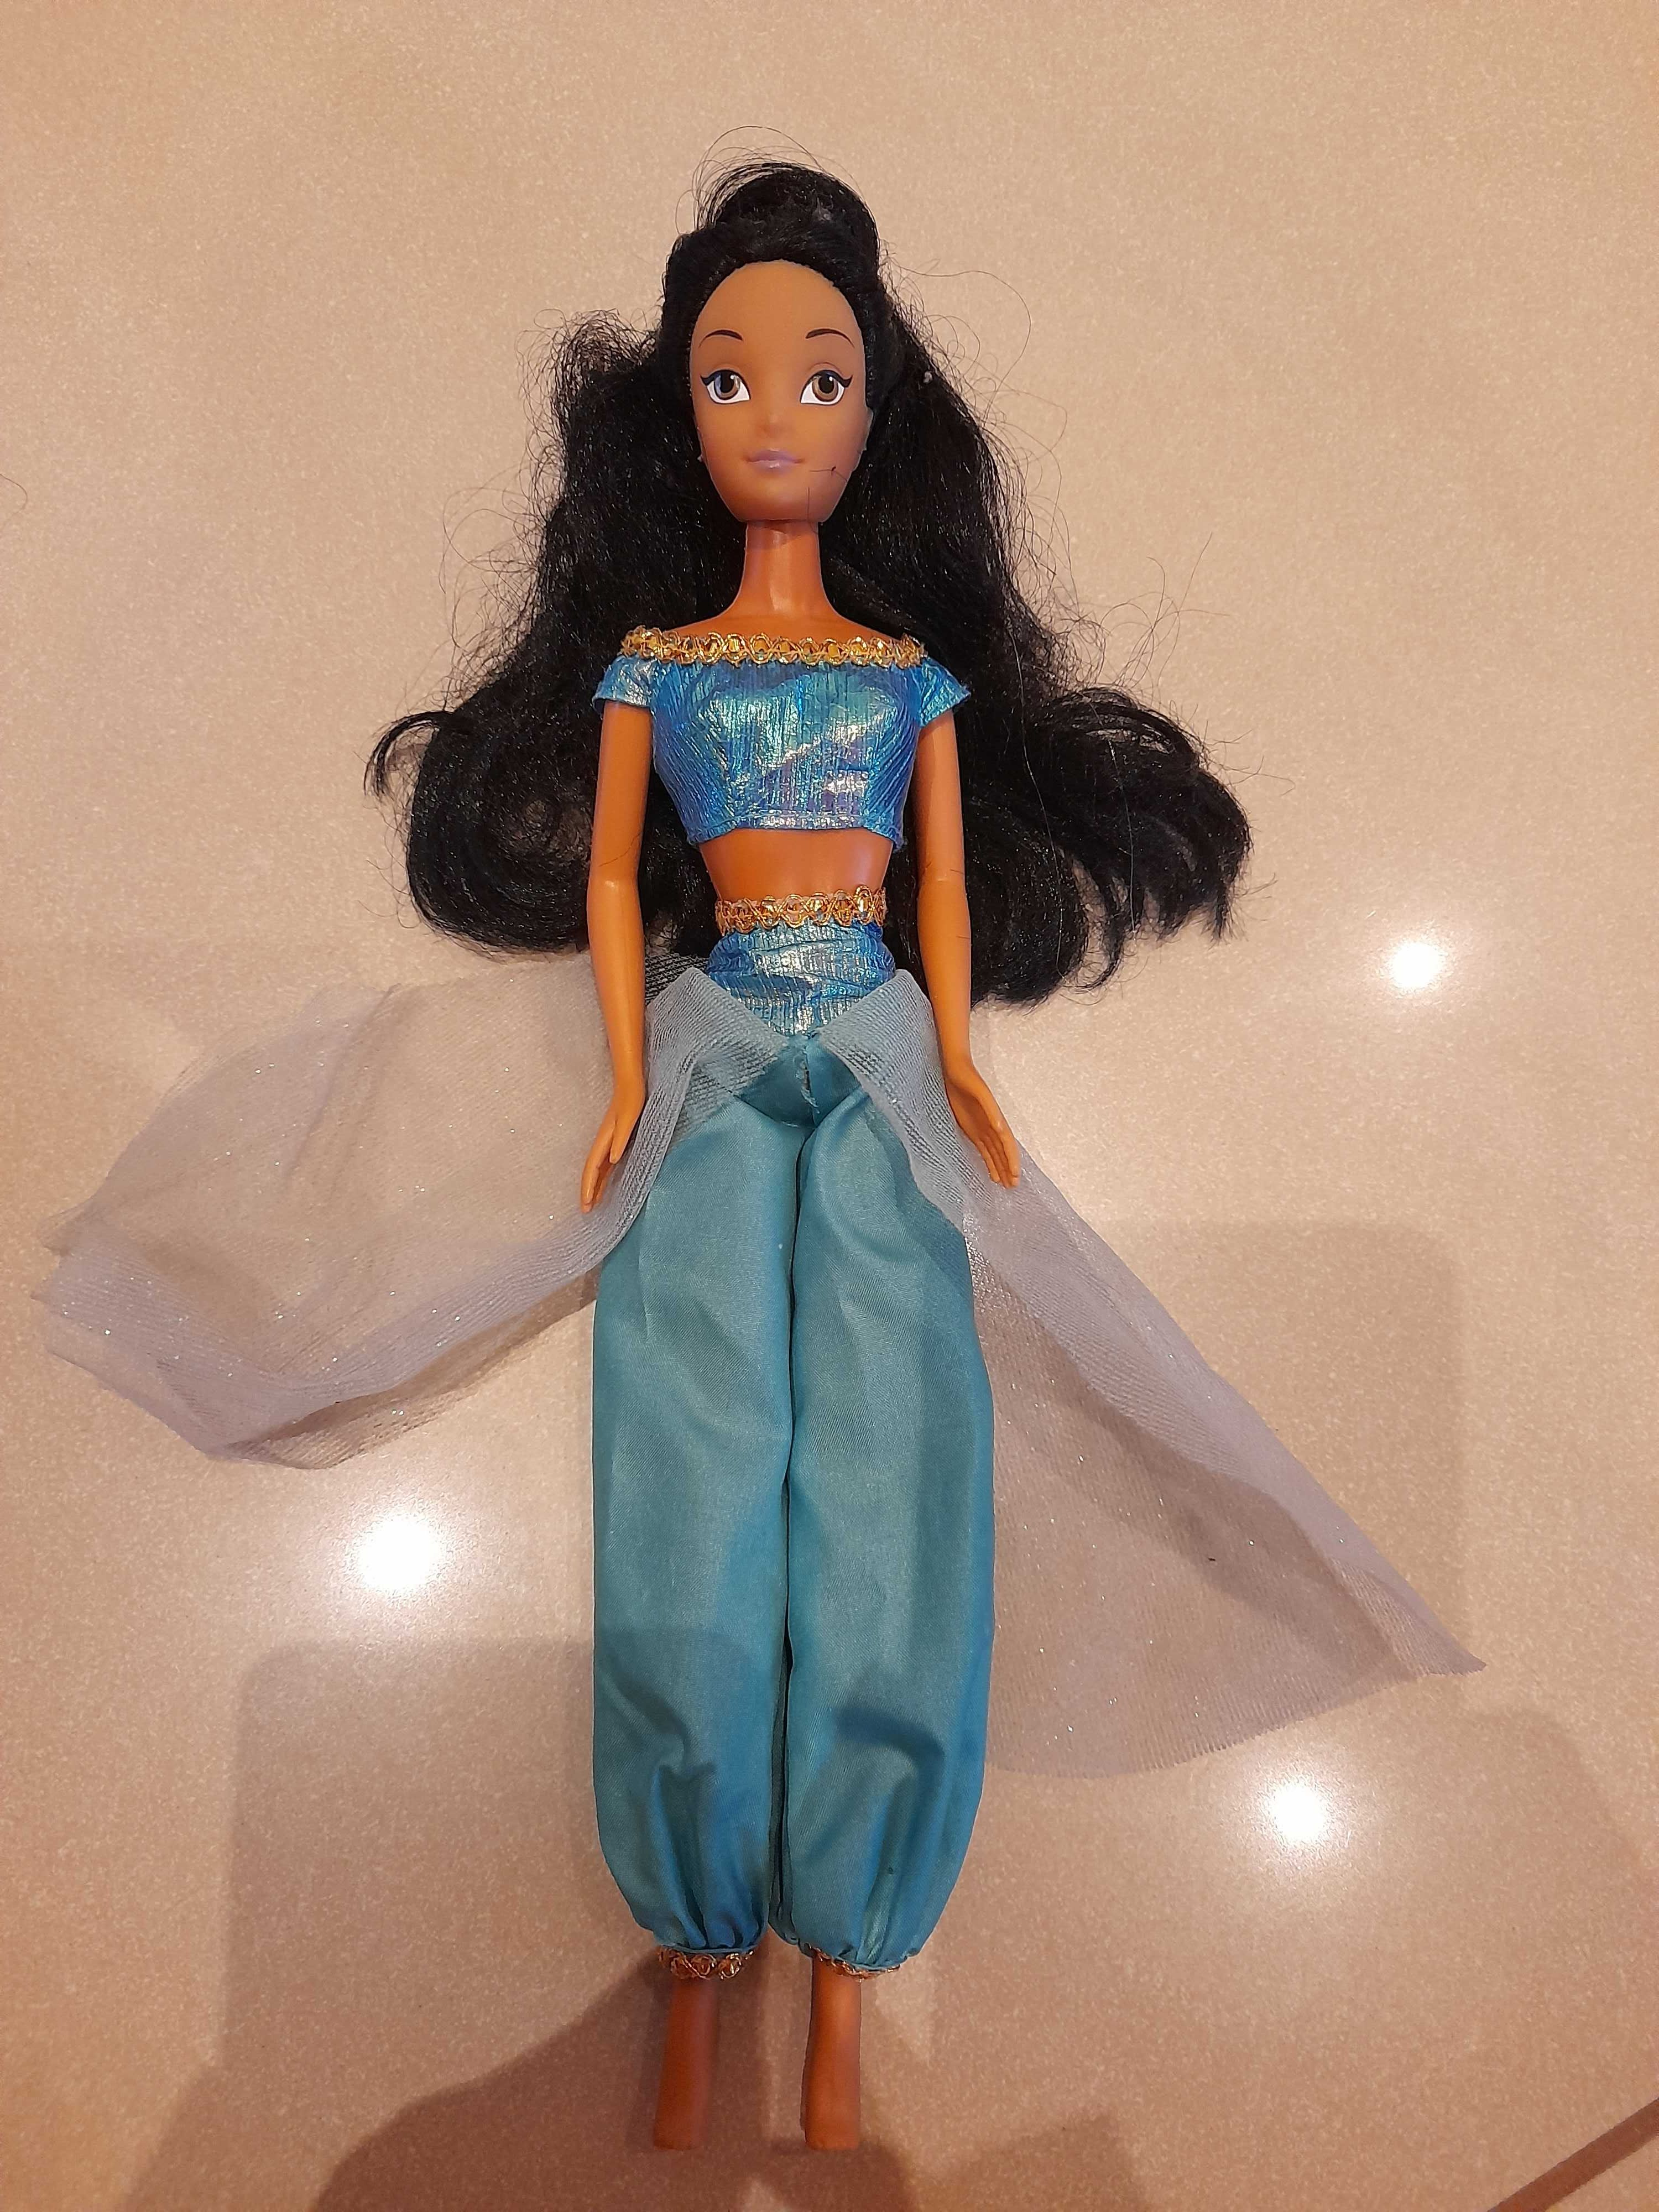 Lego Disney Princess 41061 i lalka Barbie